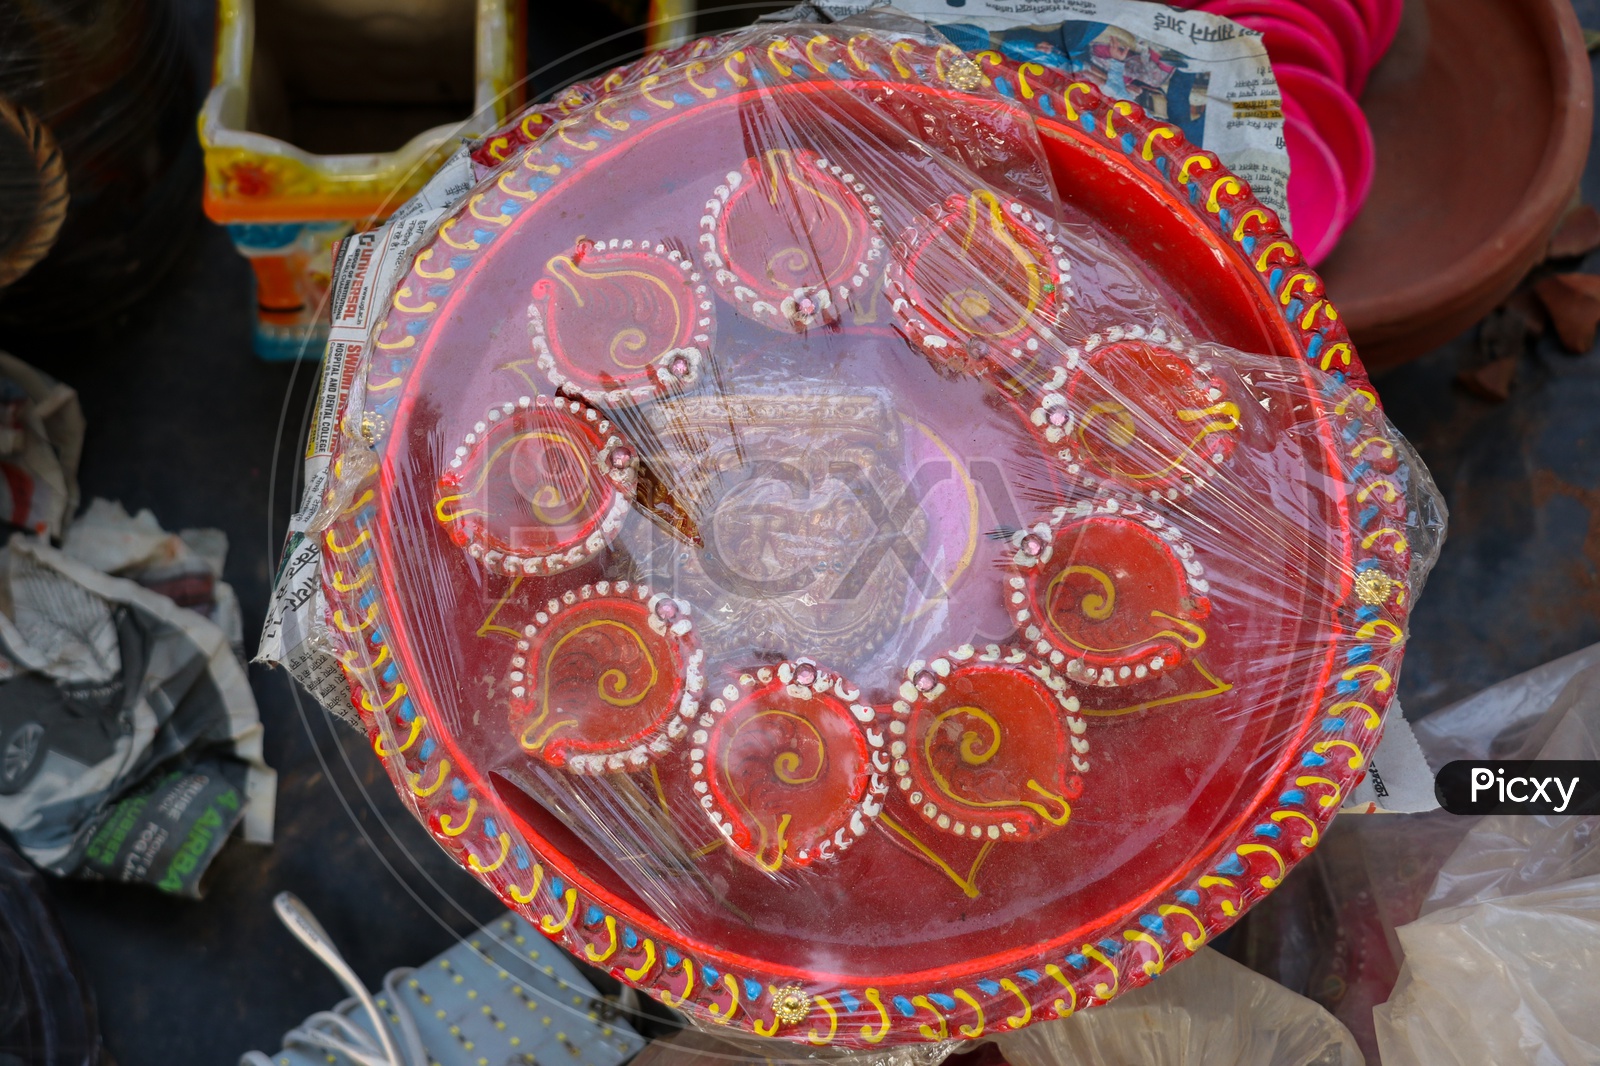 Hand Made Beautiful Clay Diwali Dias At a Road Side Vendor Stall